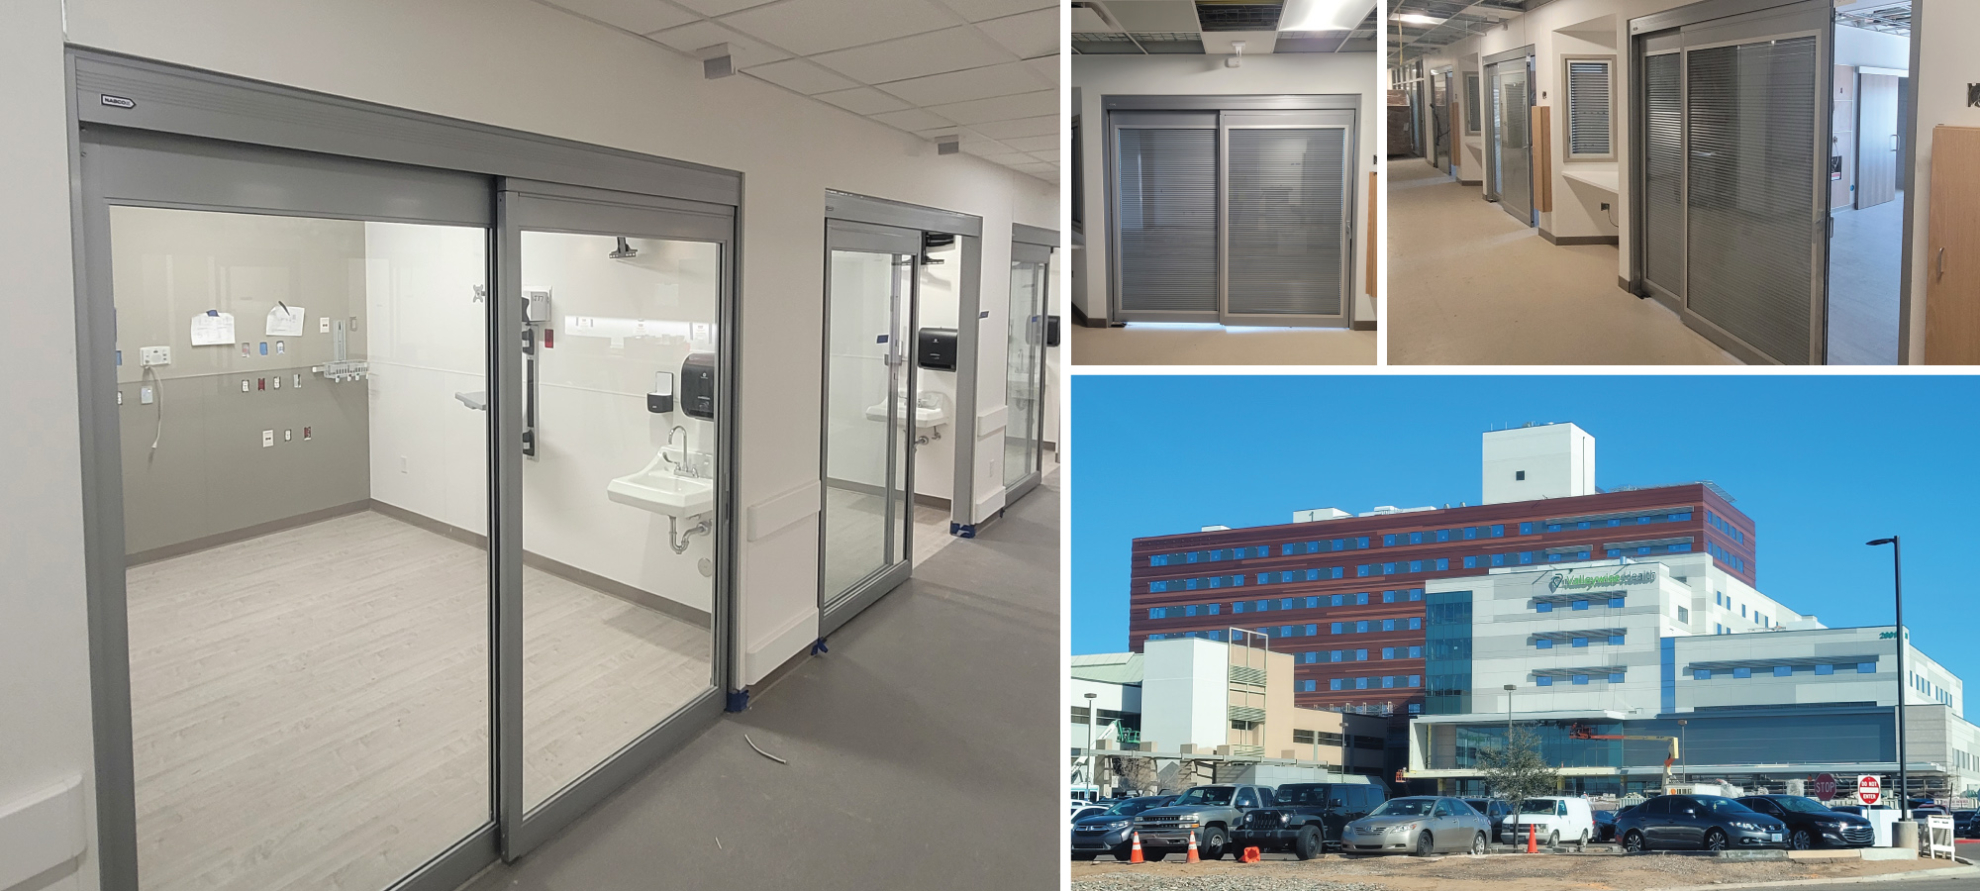 ICU Doors Complete 7-Story Hospital Addition